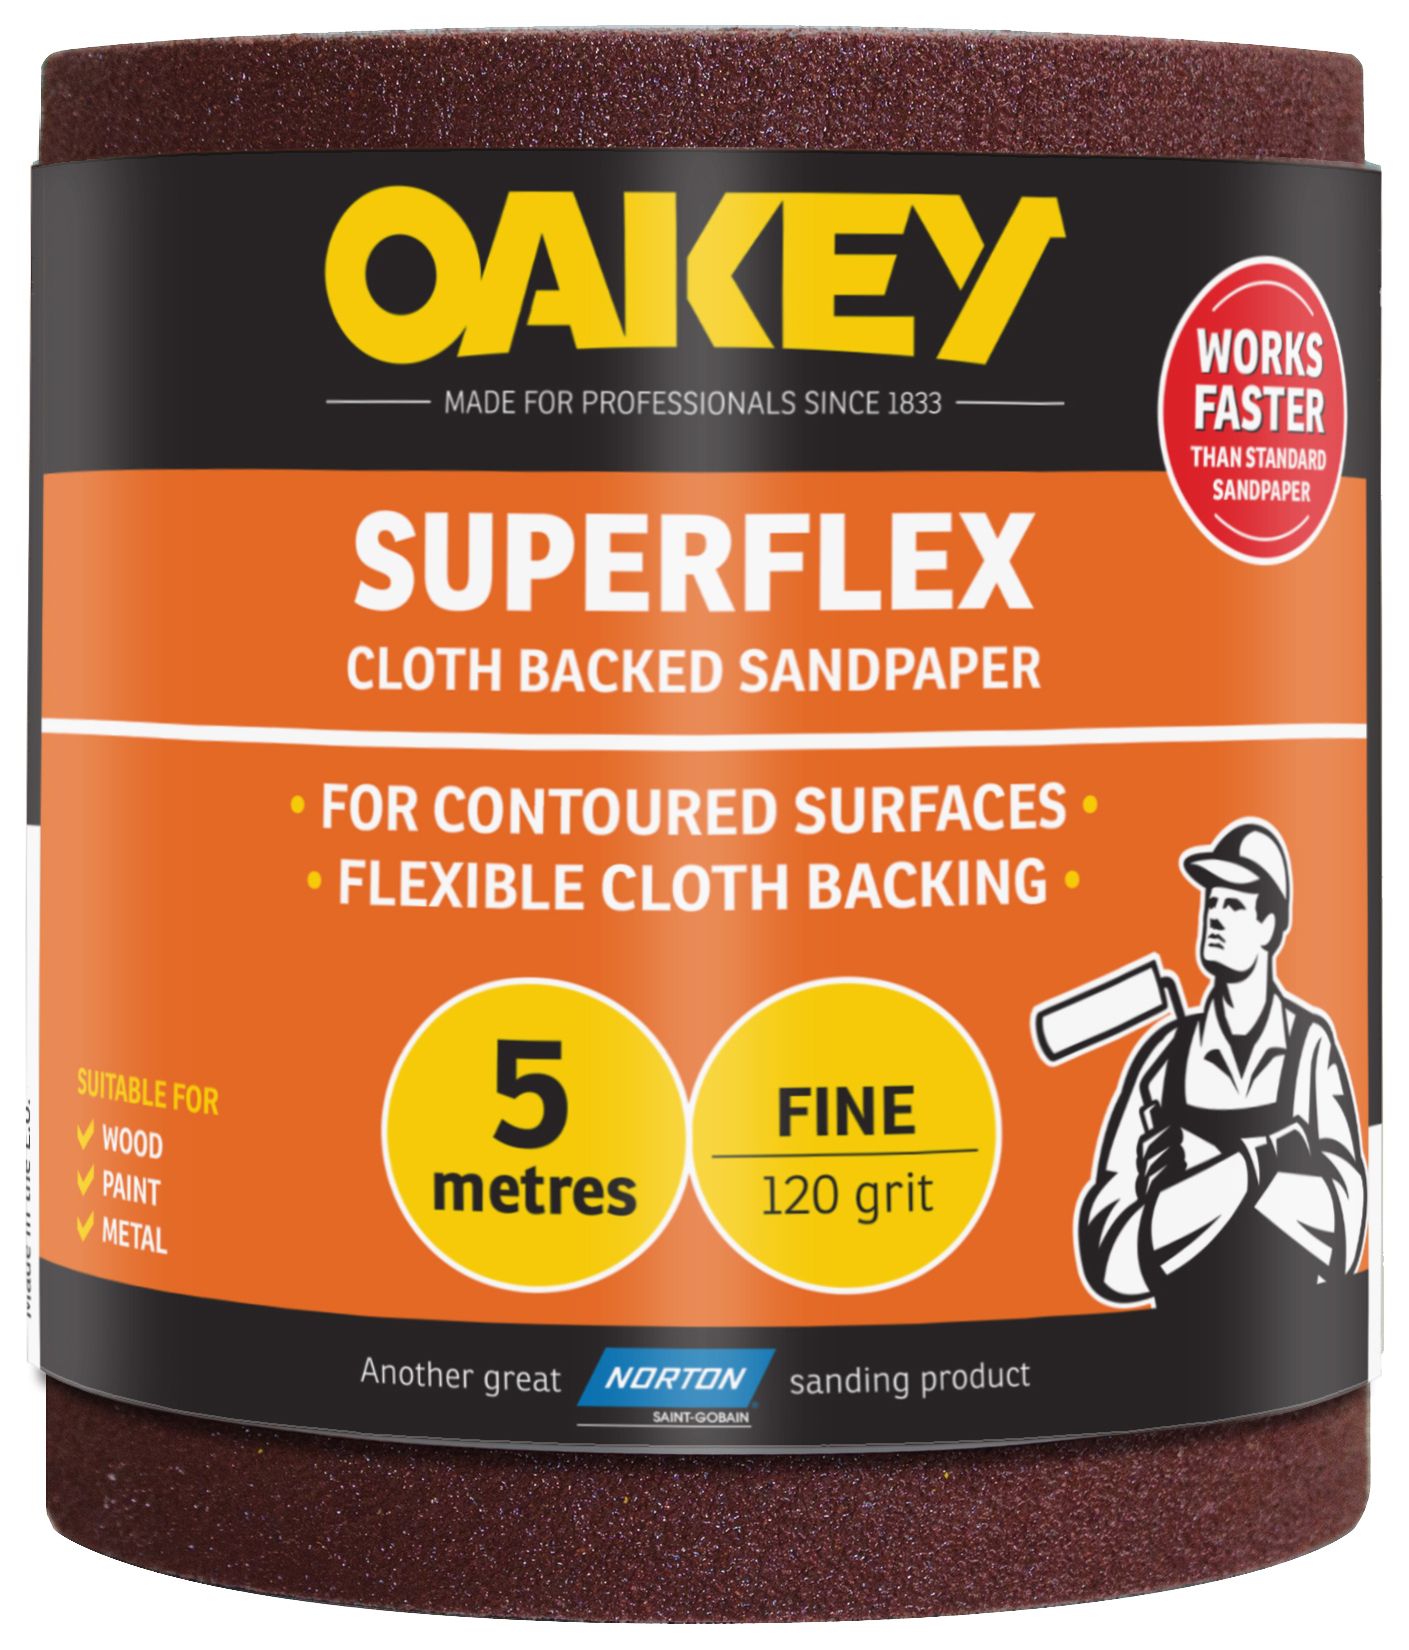 Image of Oakey 120 Grit Superflex Sandpaper Roll - 5m x 115mm